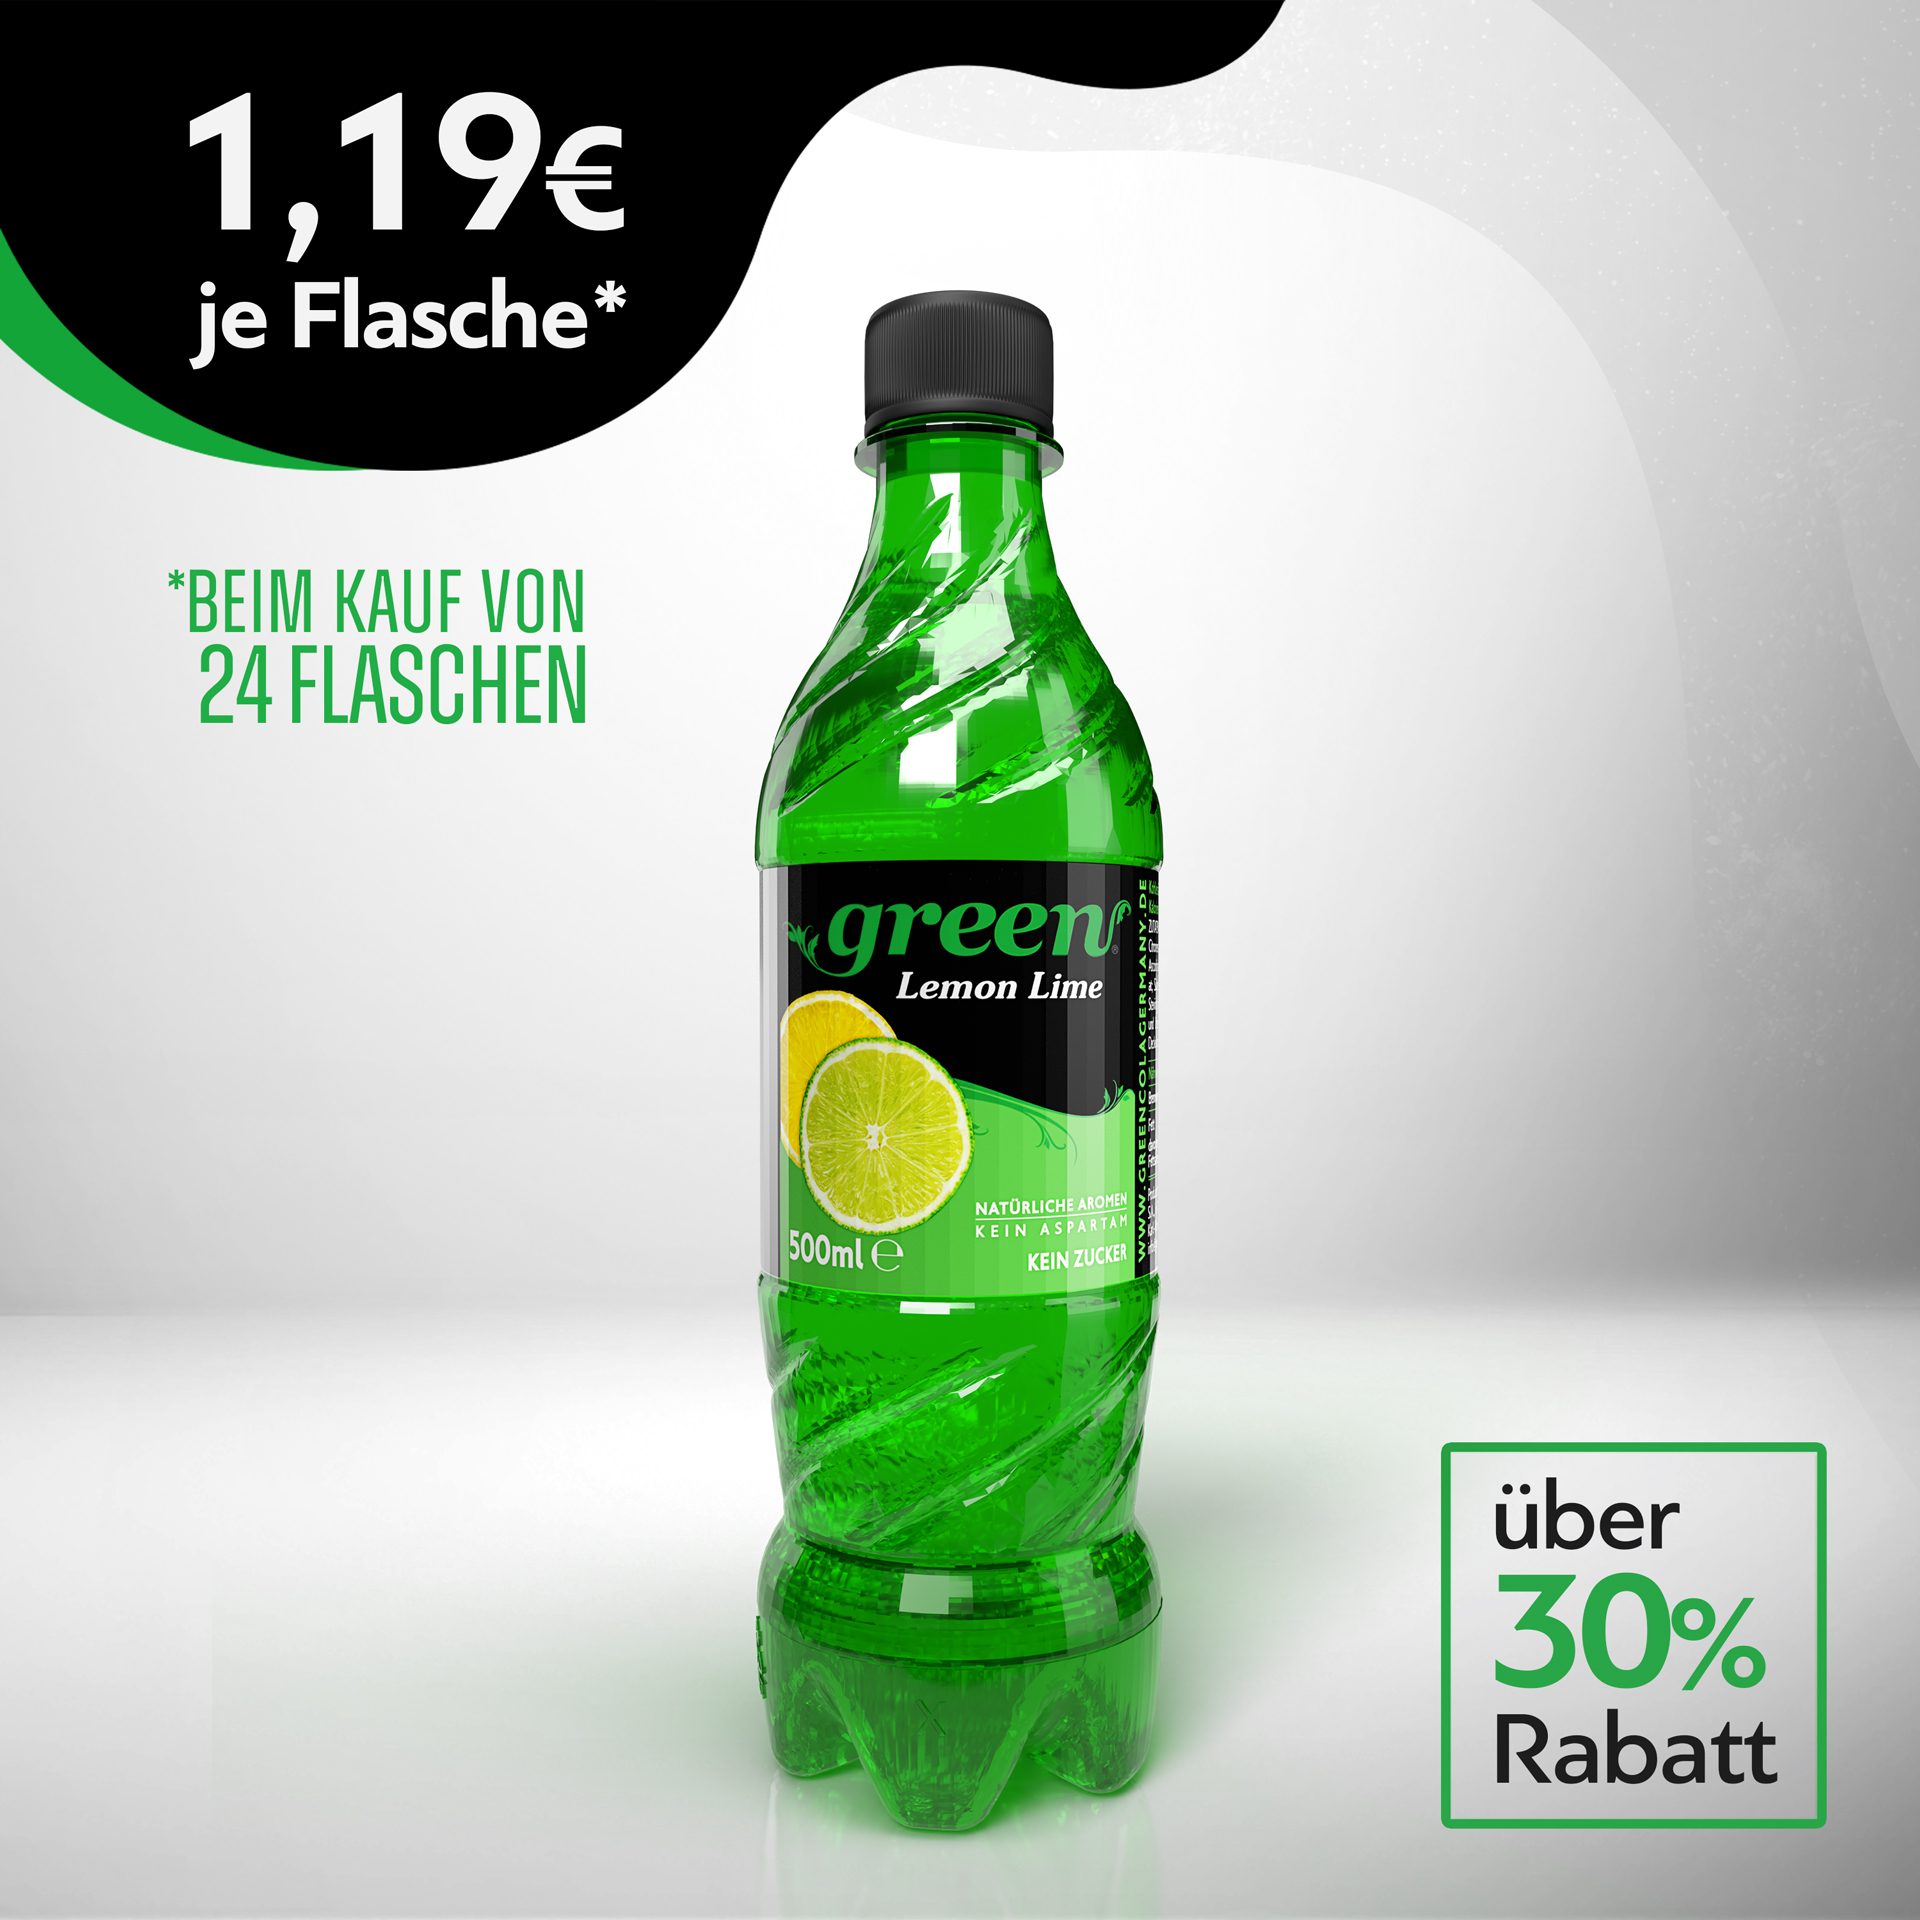  Green Lemon Lime DPG 6 x 500ml Pet